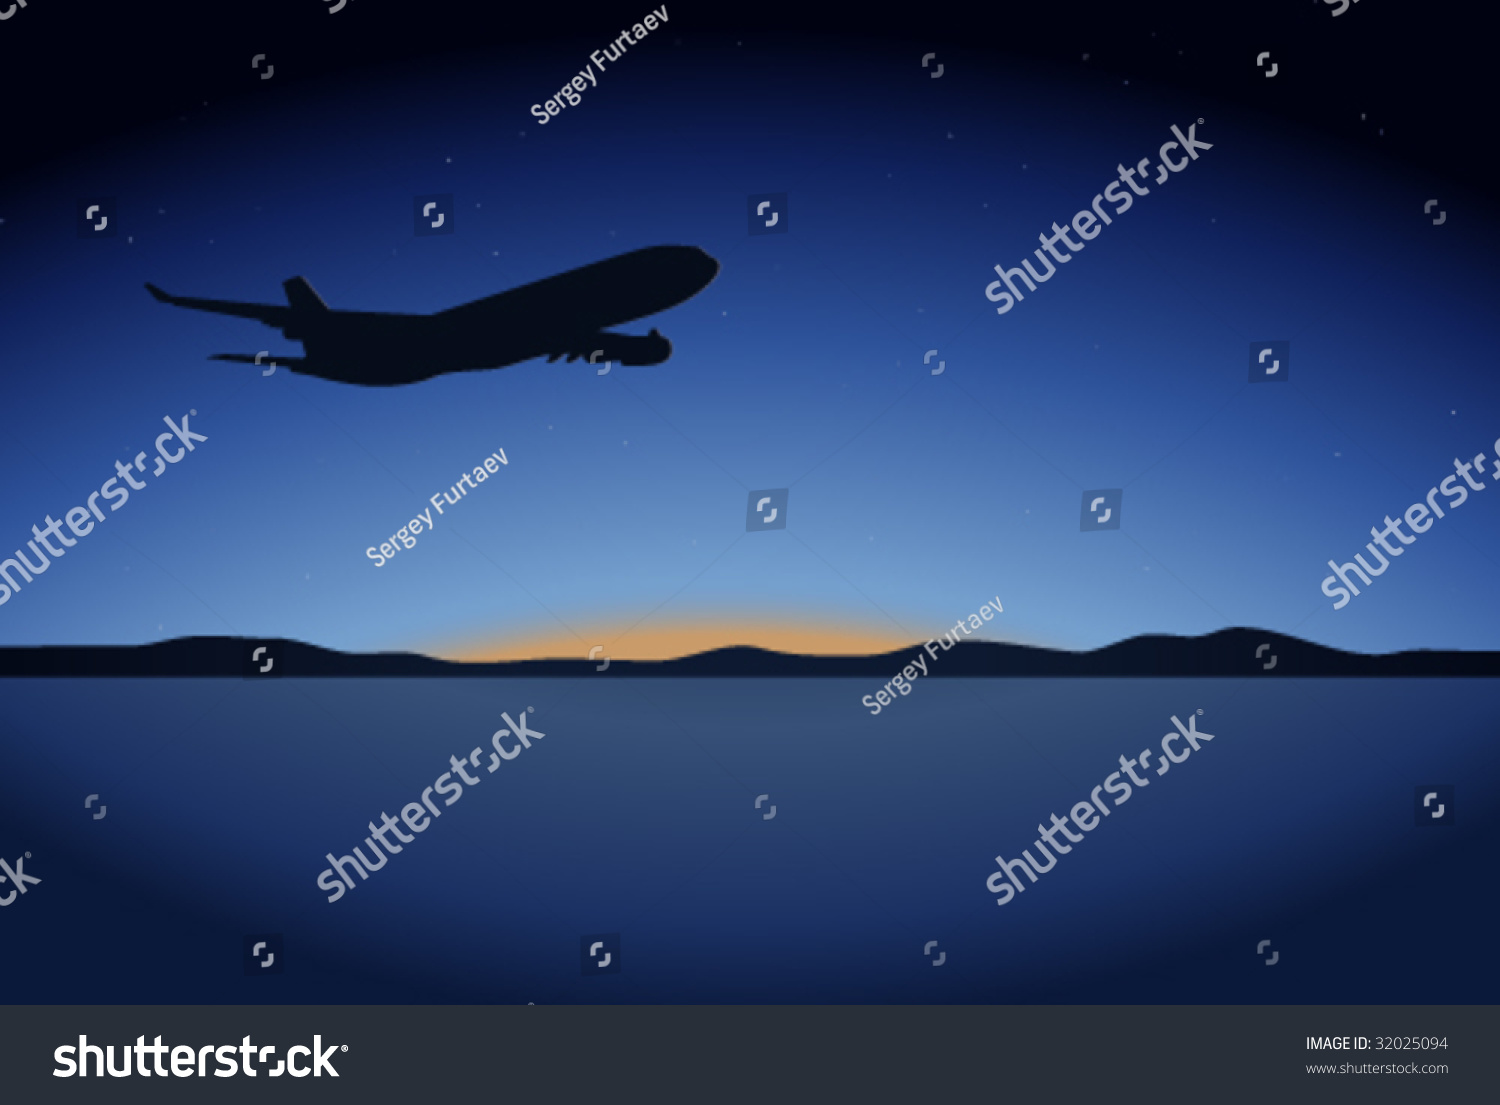 SVG of Night aircraft gaining altitude. svg